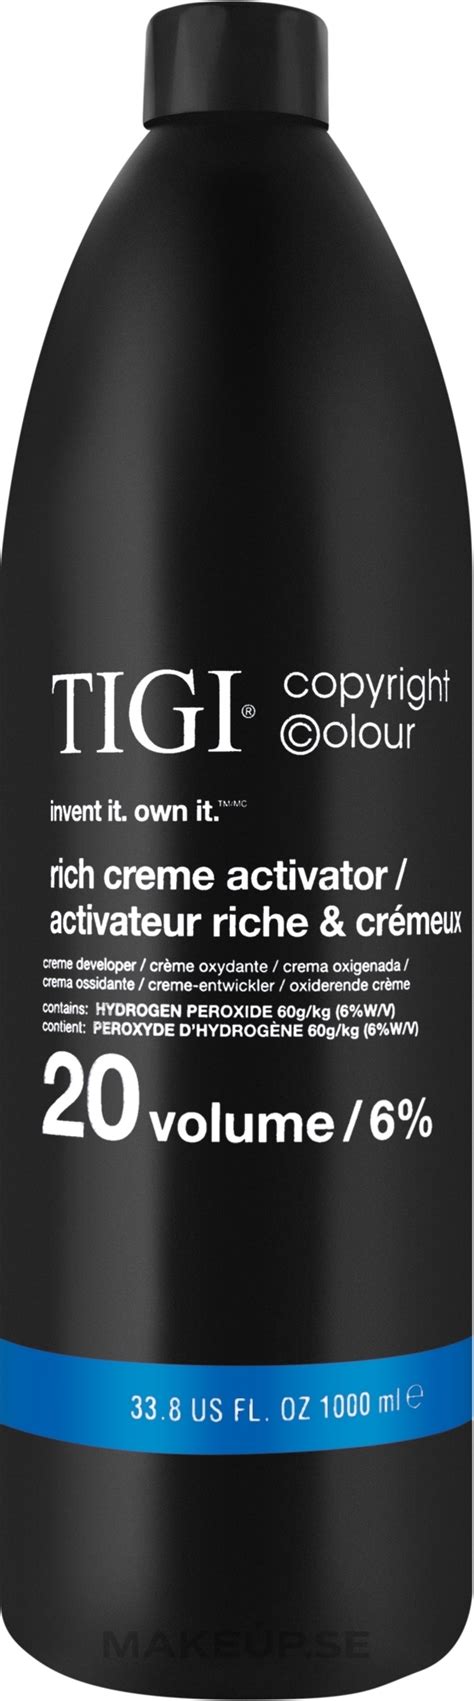 TIGI Colour Activator 20 Vol 6 Activator Makeup Se